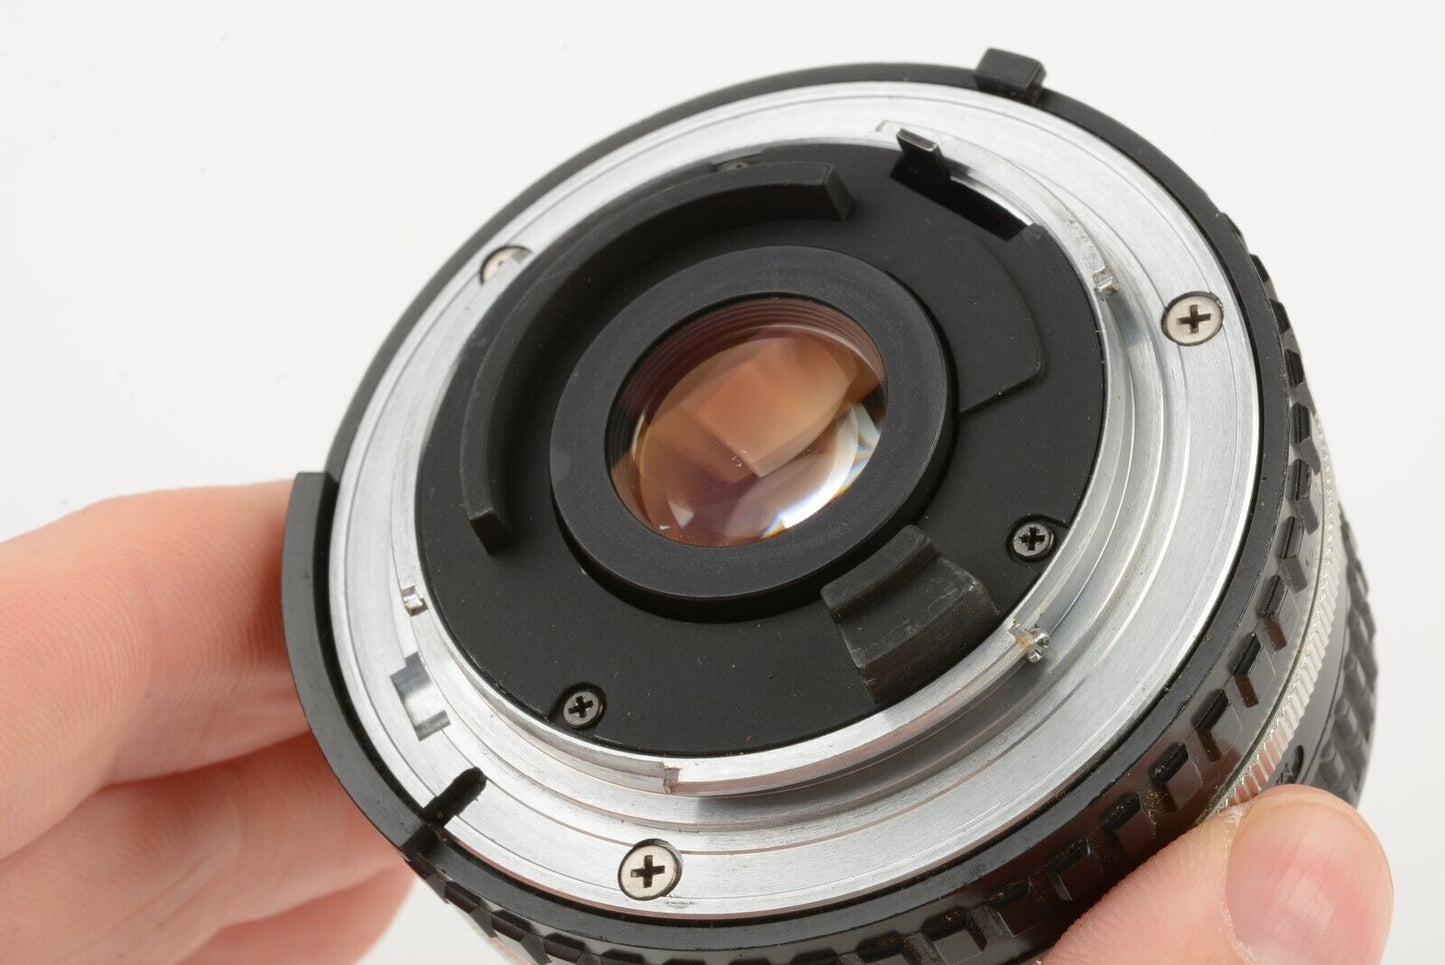 EXC++ NIKON 28mm F2.8 SERIES E AI-S COMPACT PRIME WIDE LENS, CAPS, CLEAN & SHARP